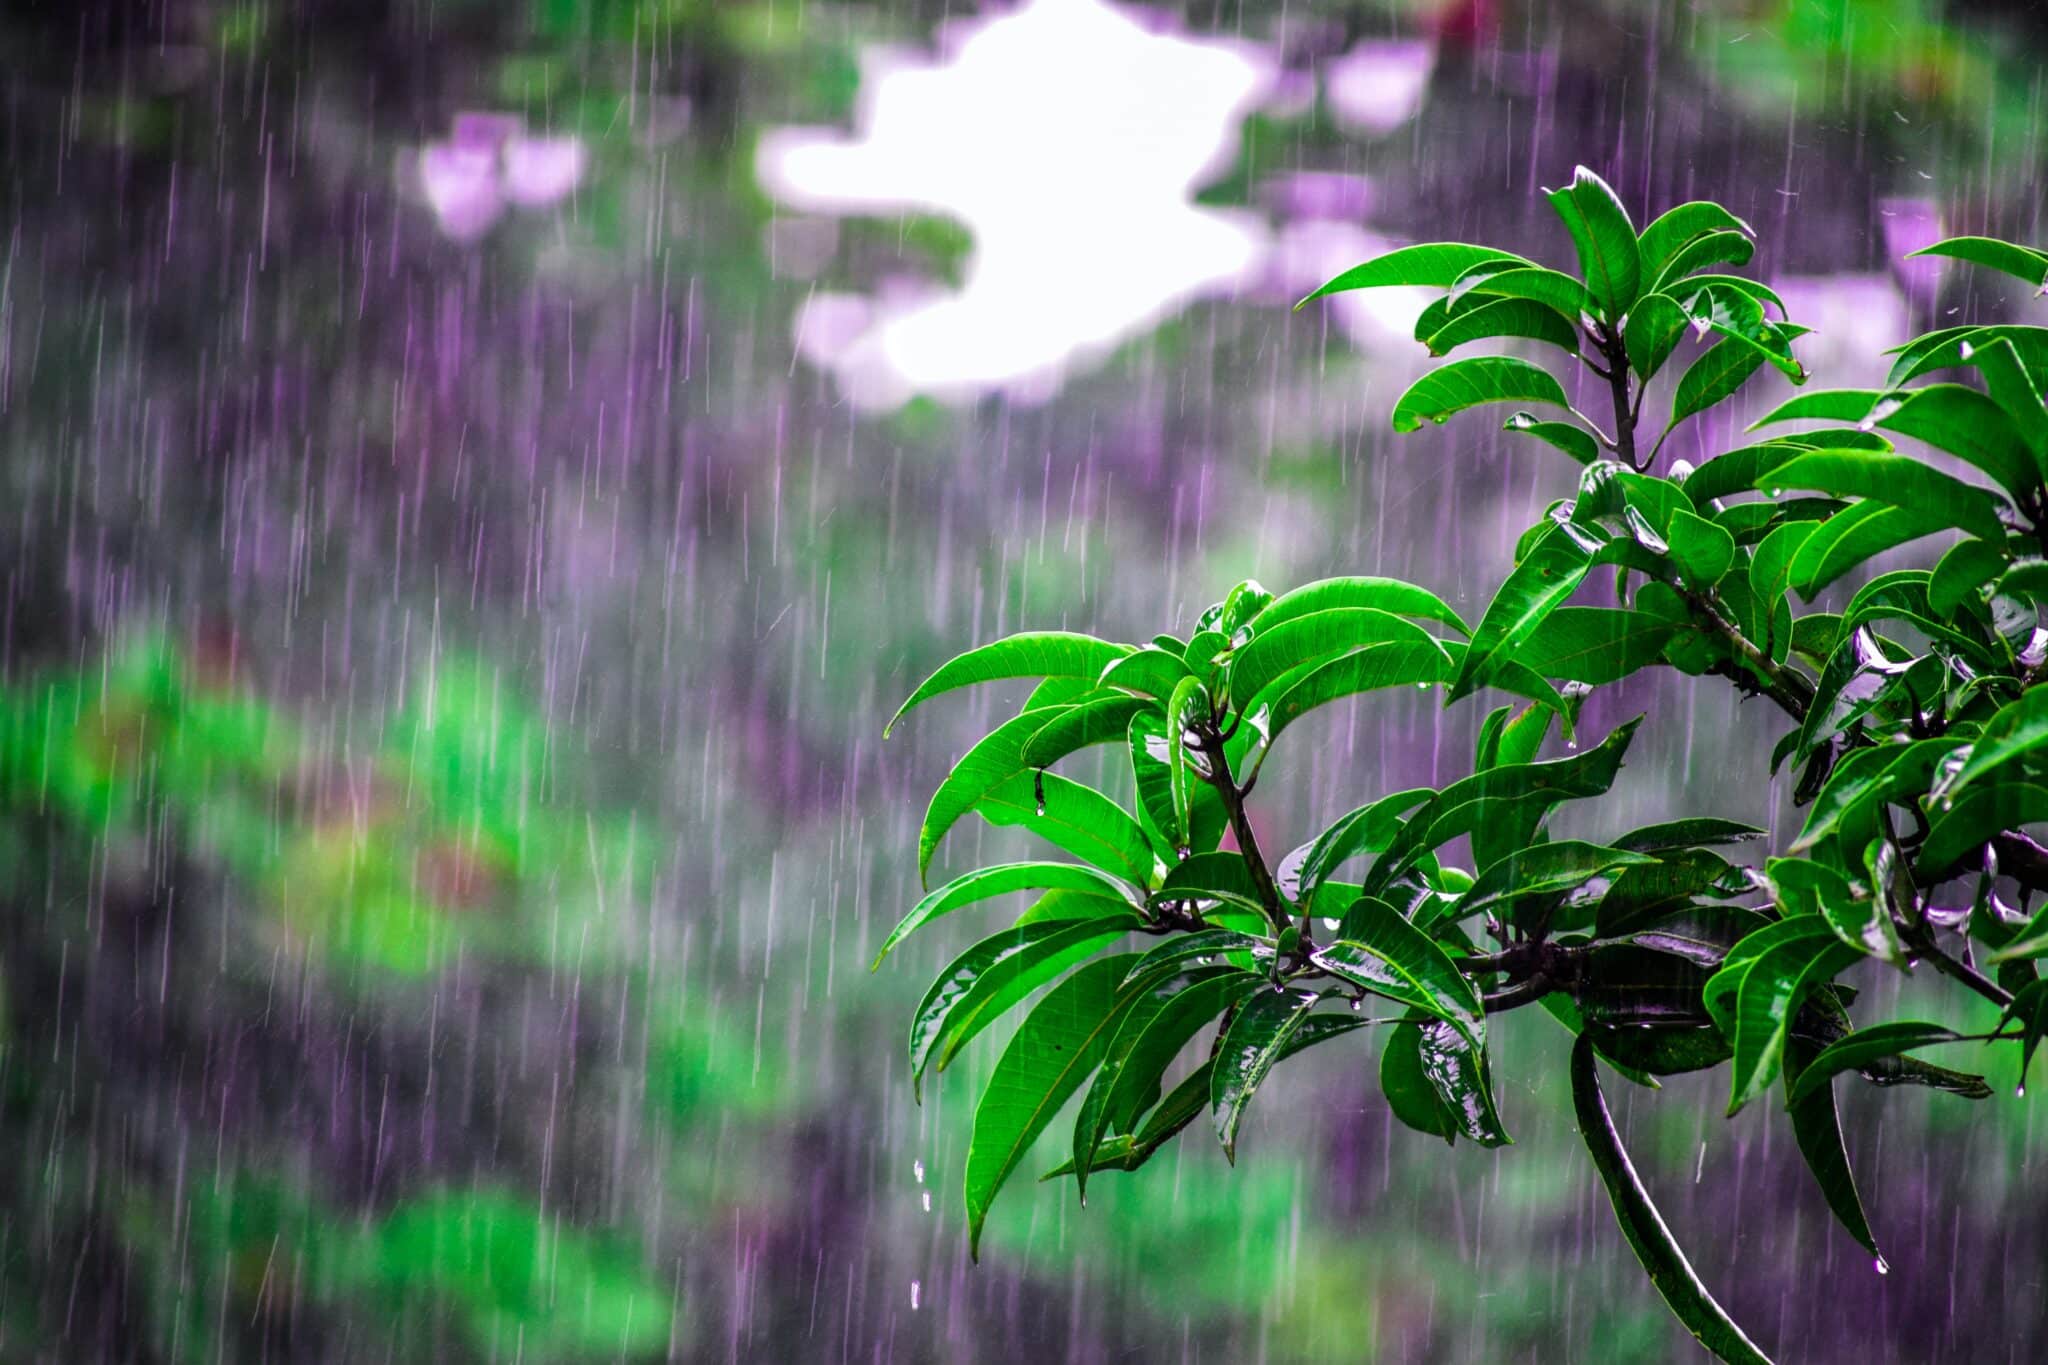 Ilustrasi hujan. Foto: Bibhukalyan Acharya: https://www.pexels.com/photo/selective-focus-photo-of-obalte-green-leafed-plants-during-rain-1463530/